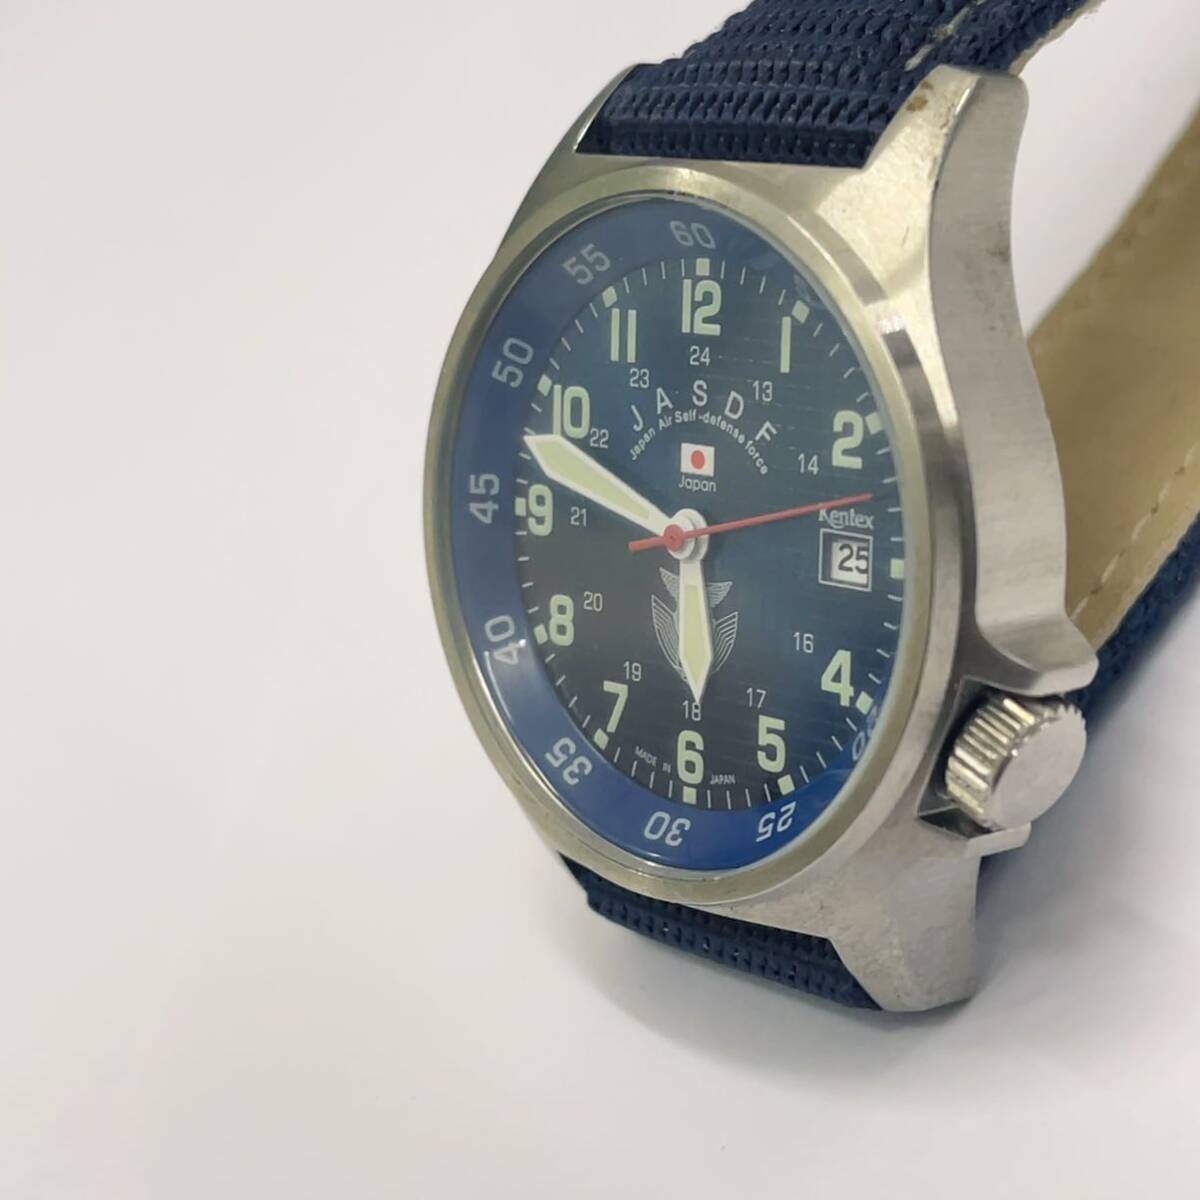 Kentex kentex JSDF aviation self .. model men's wristwatch quartz blue face S455M operation goods 